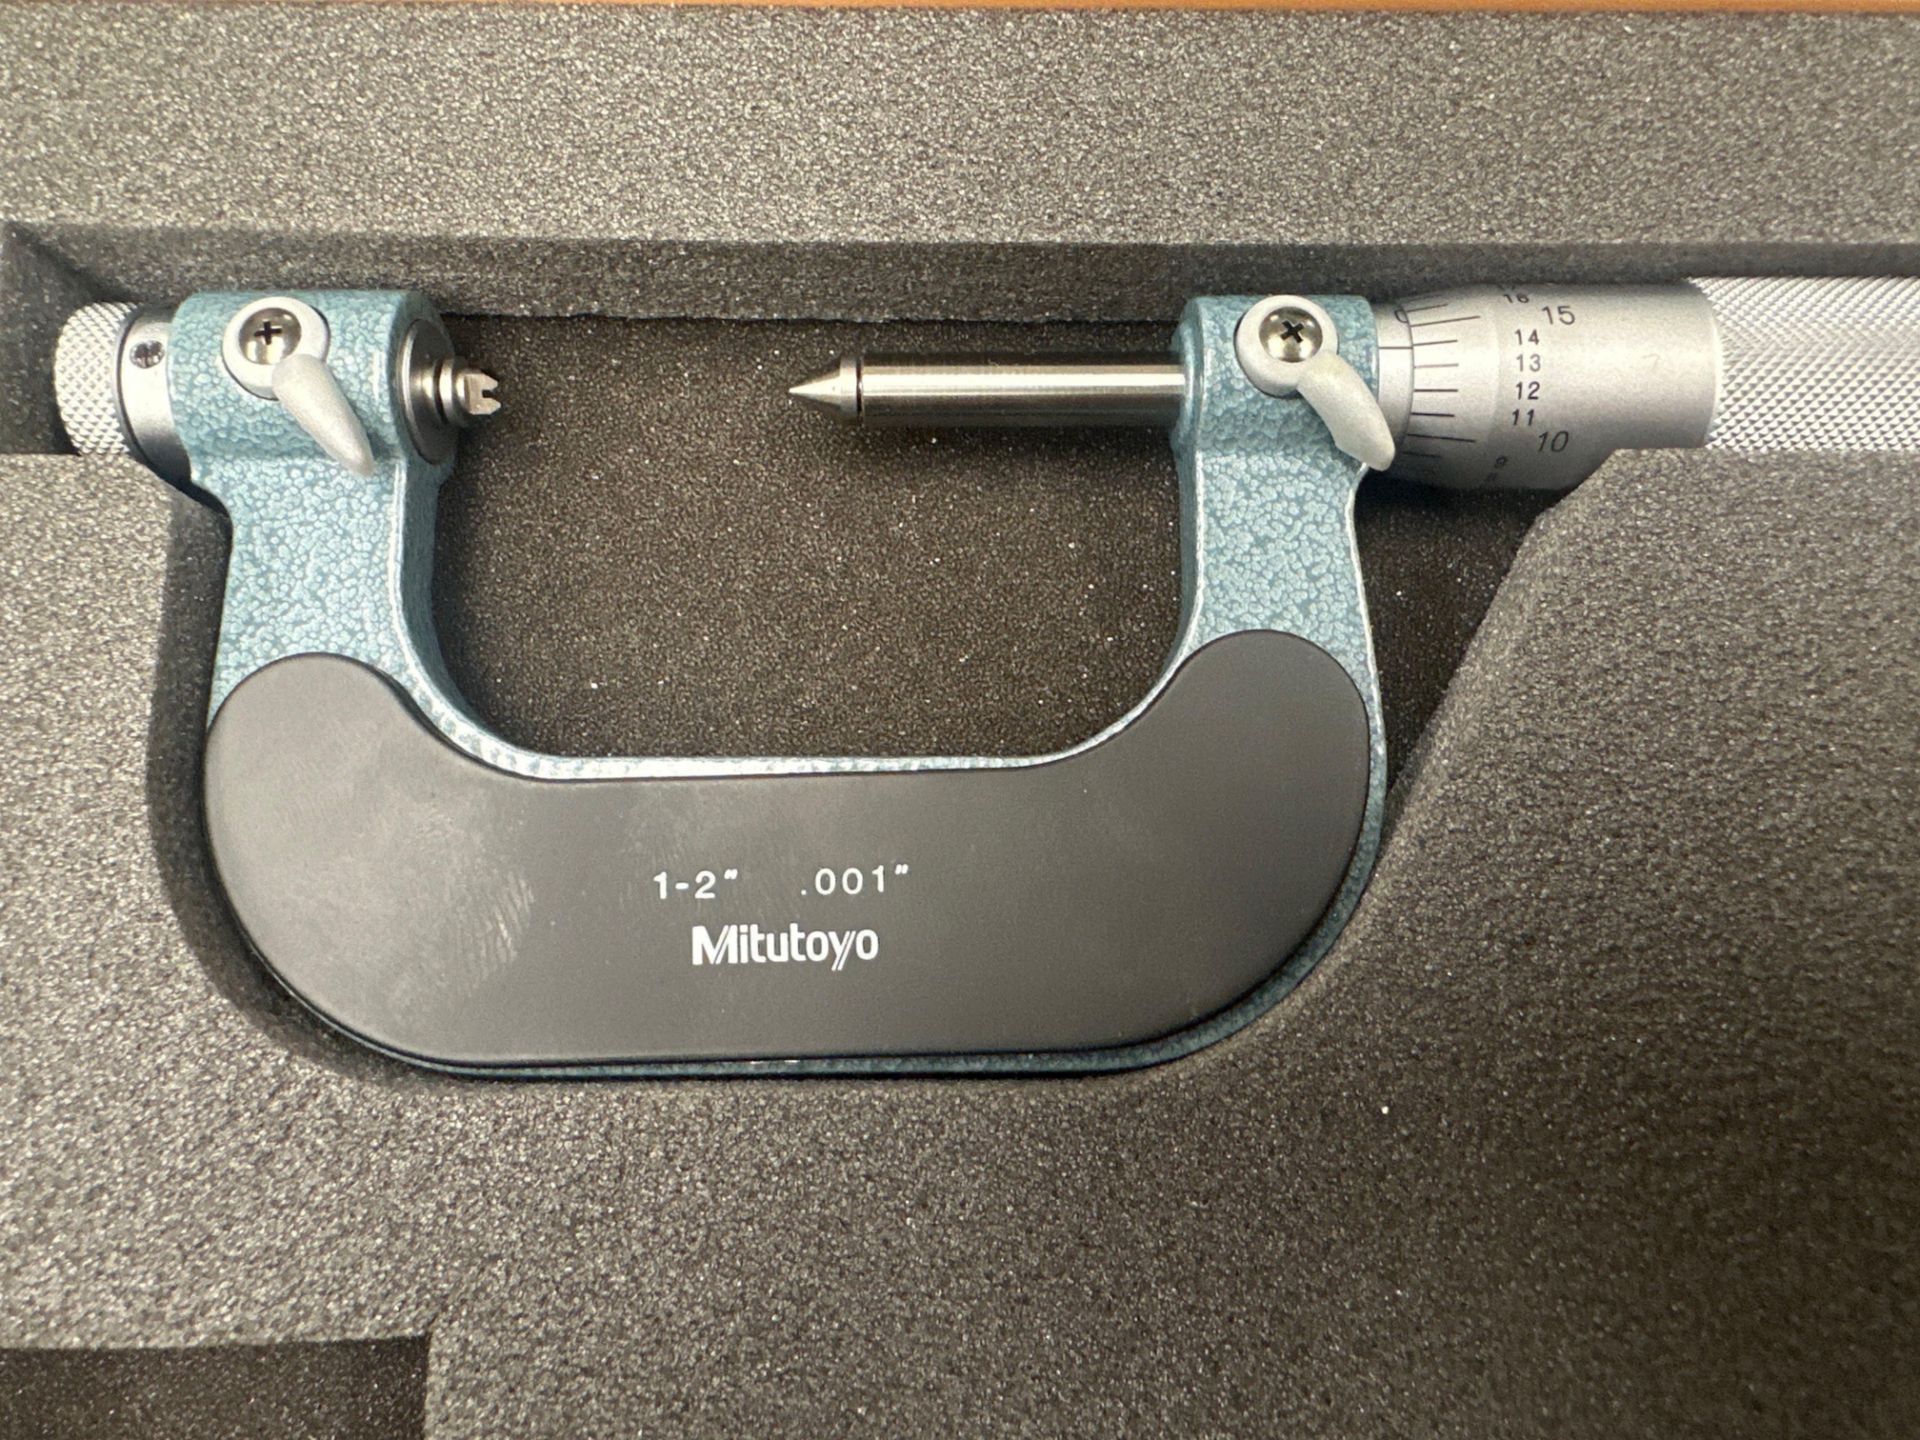 1" - 2” Mitutoyo Screw Micrometer